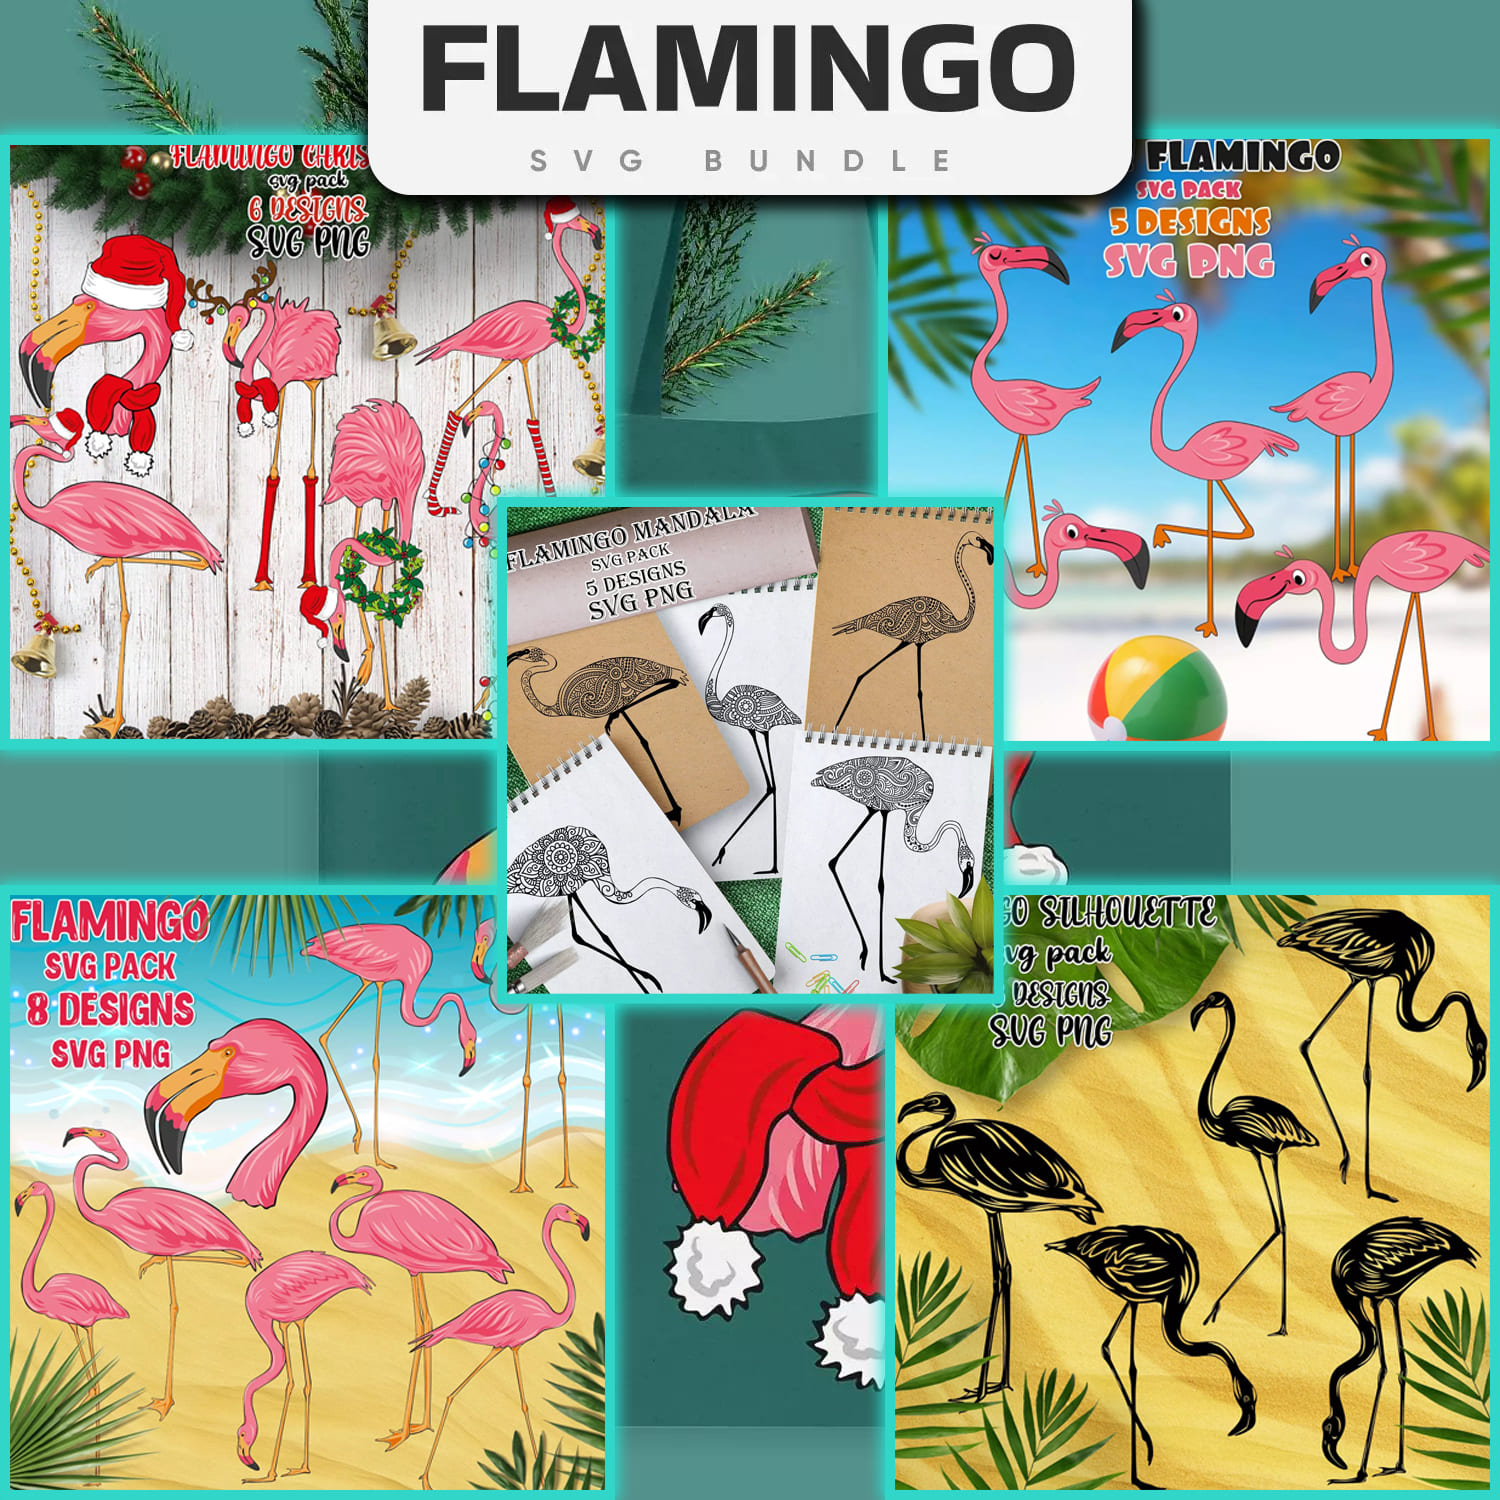 The flamingo svg bundle includes flamingos.